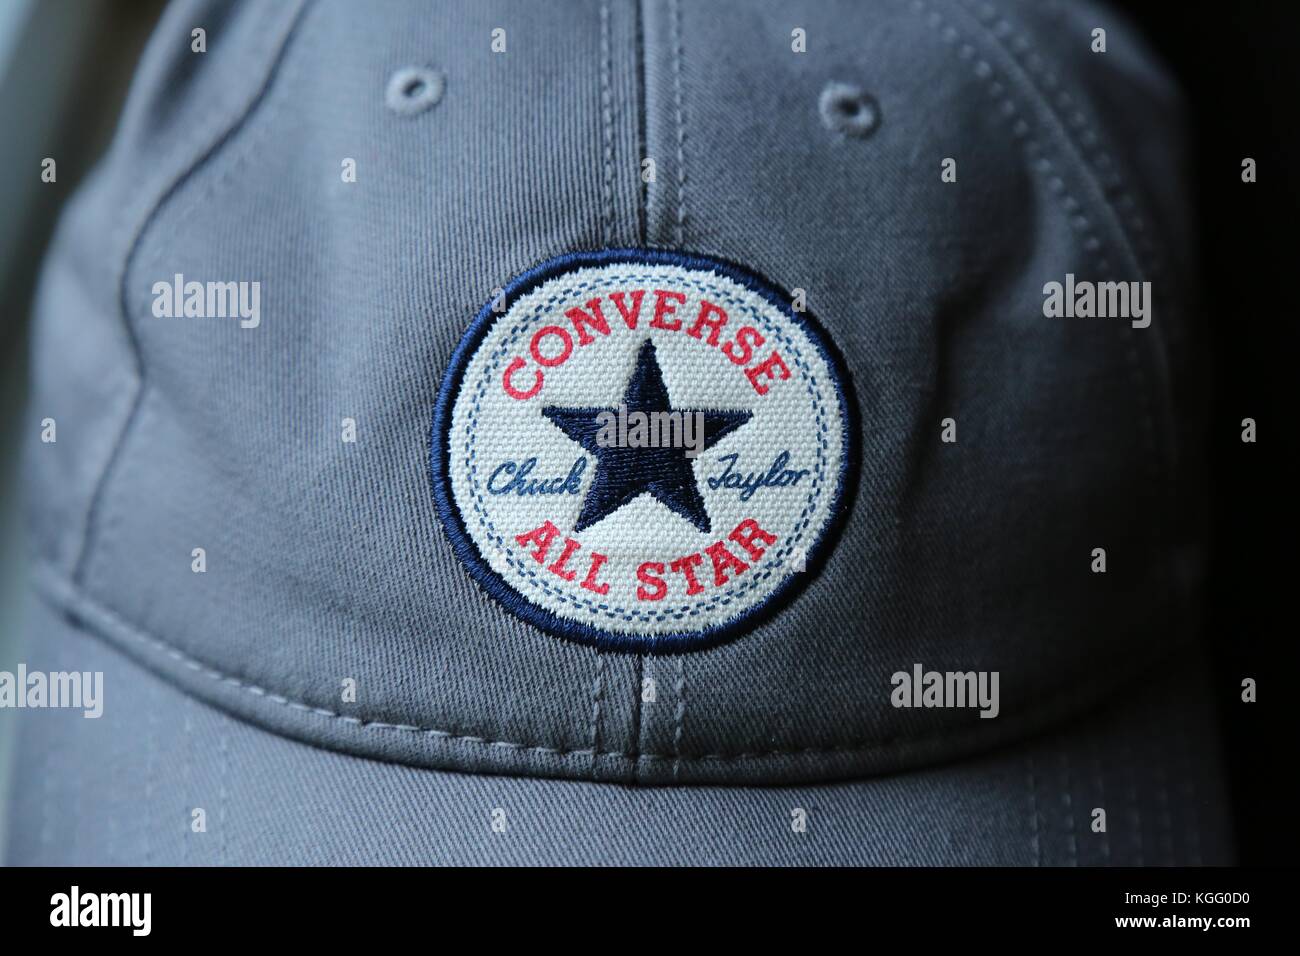 Converse Chuck Taylor all star baseball cap Badge brodé sur une casquette de baseball. Banque D'Images